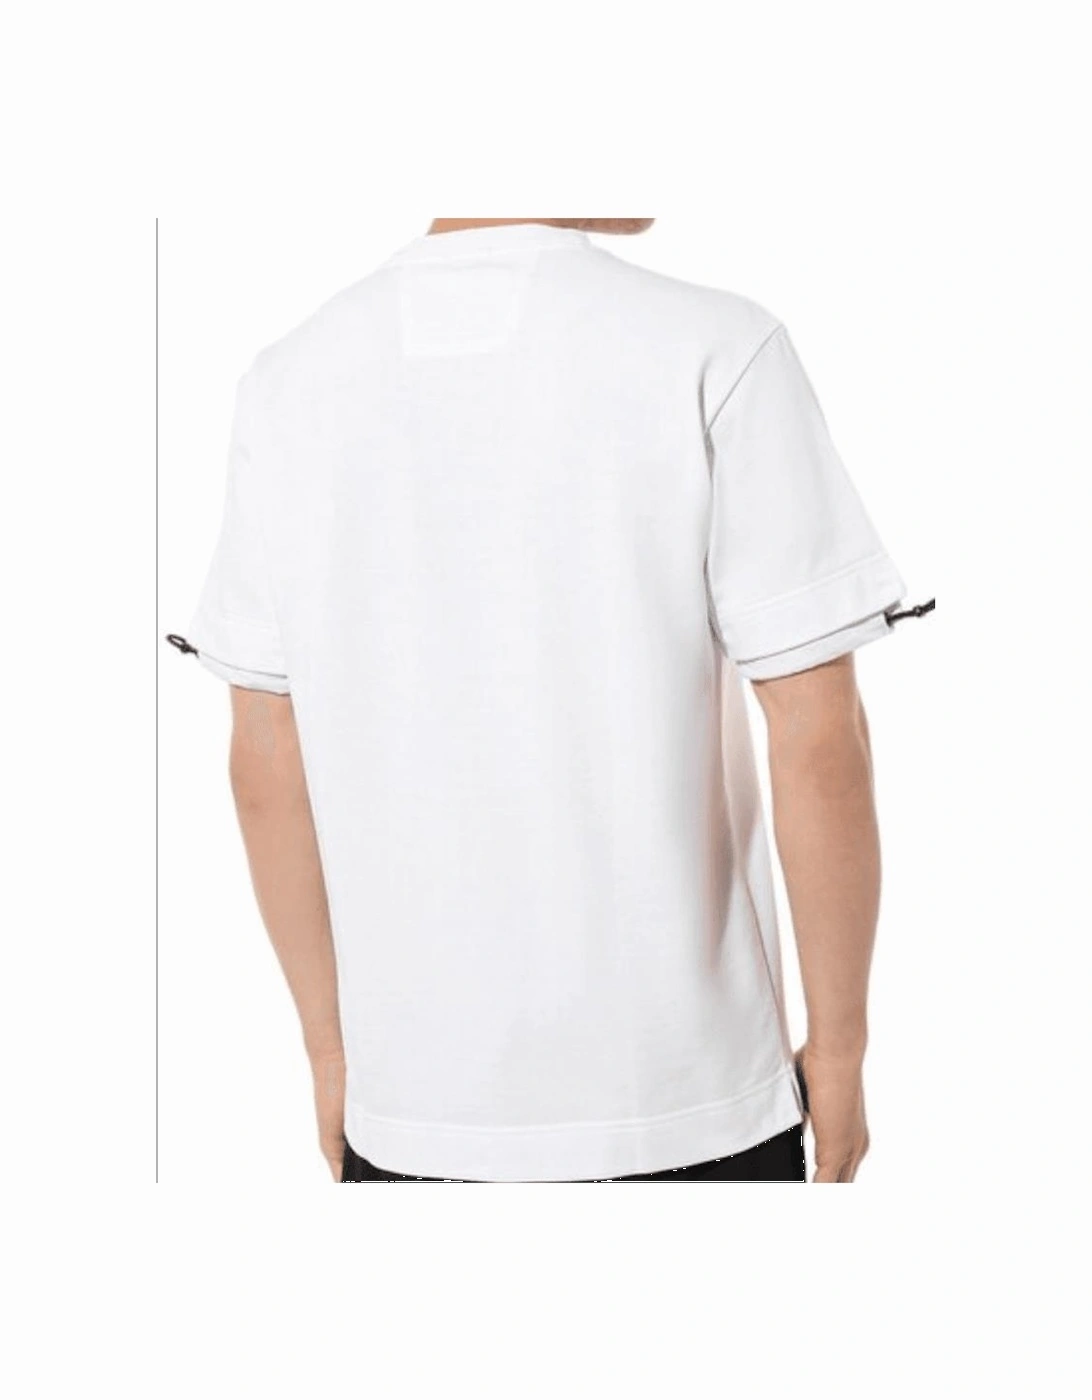 P-Tessin Cotton Adjustable Sleeve White T-Shirt